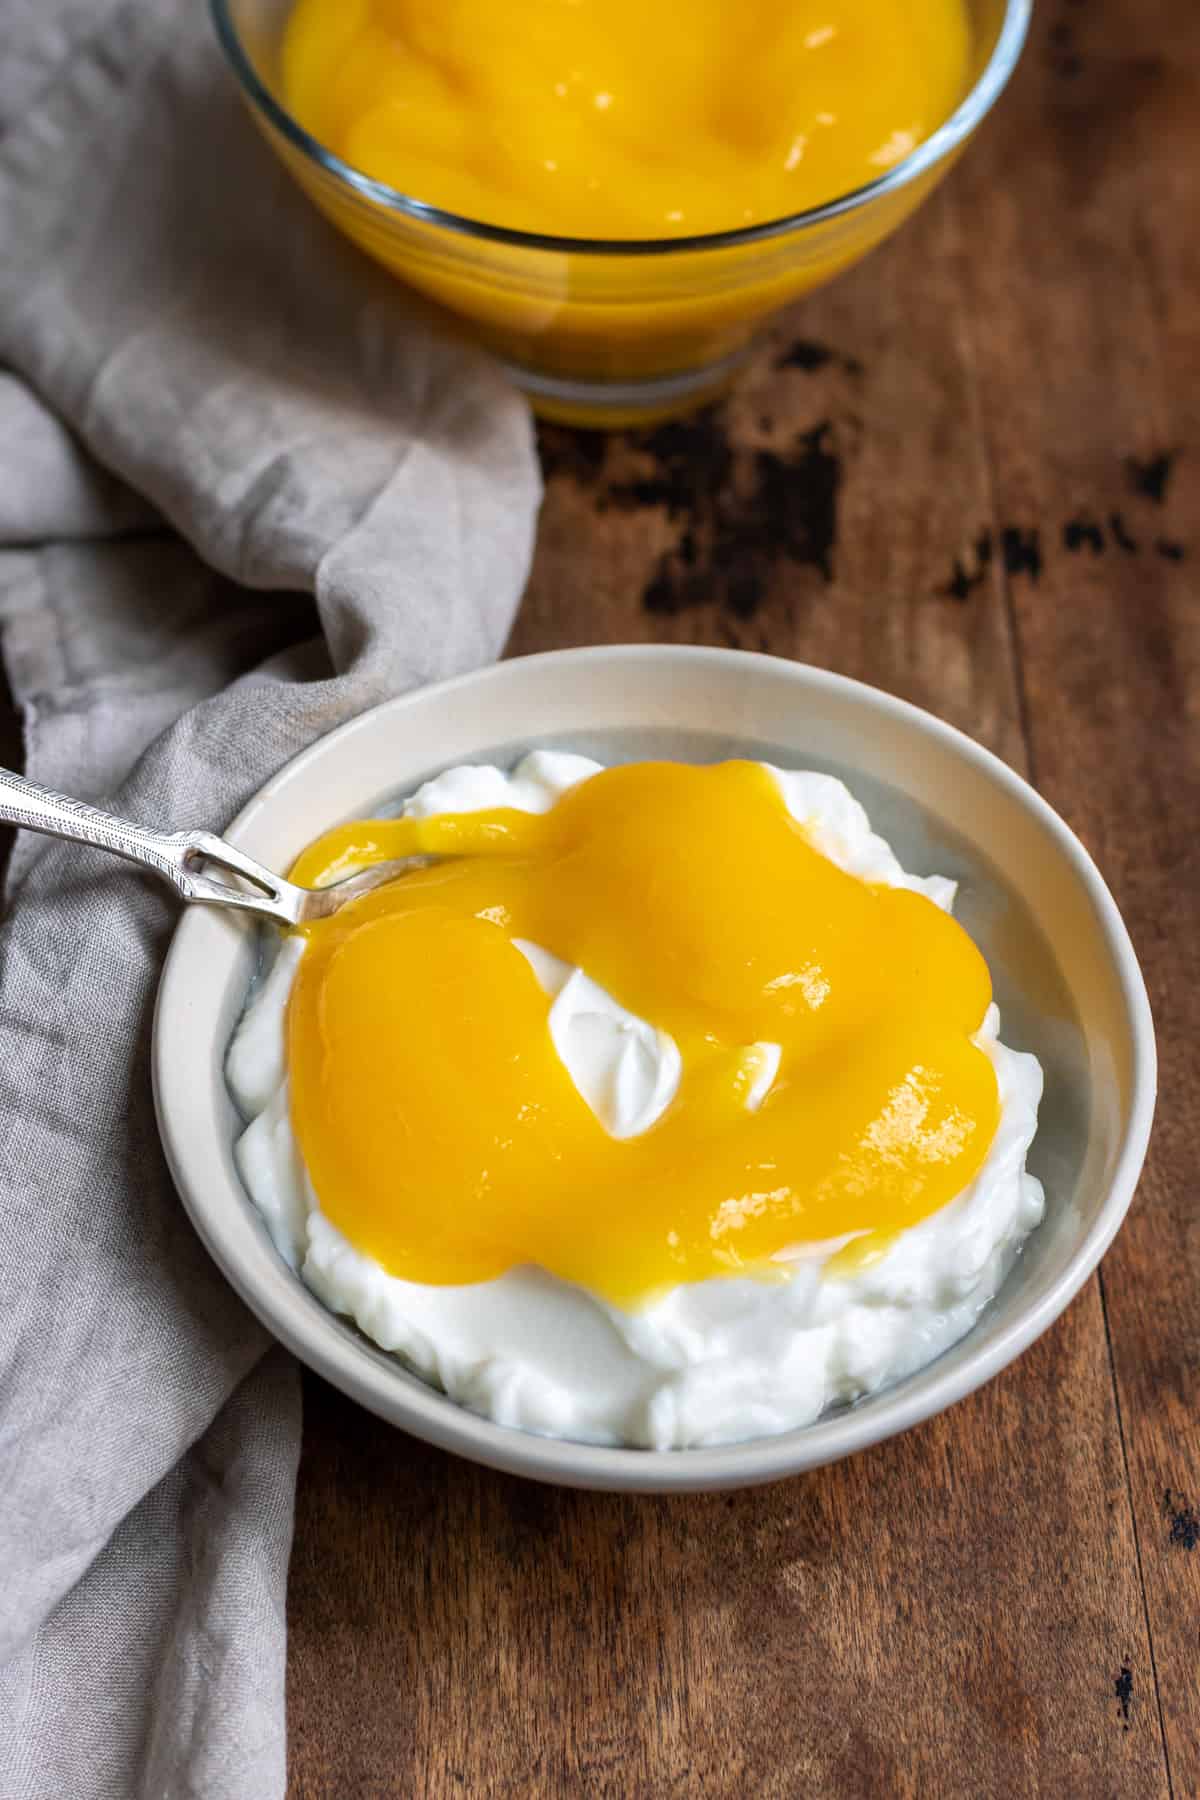 Dish of yogurt topped with mango pulp.